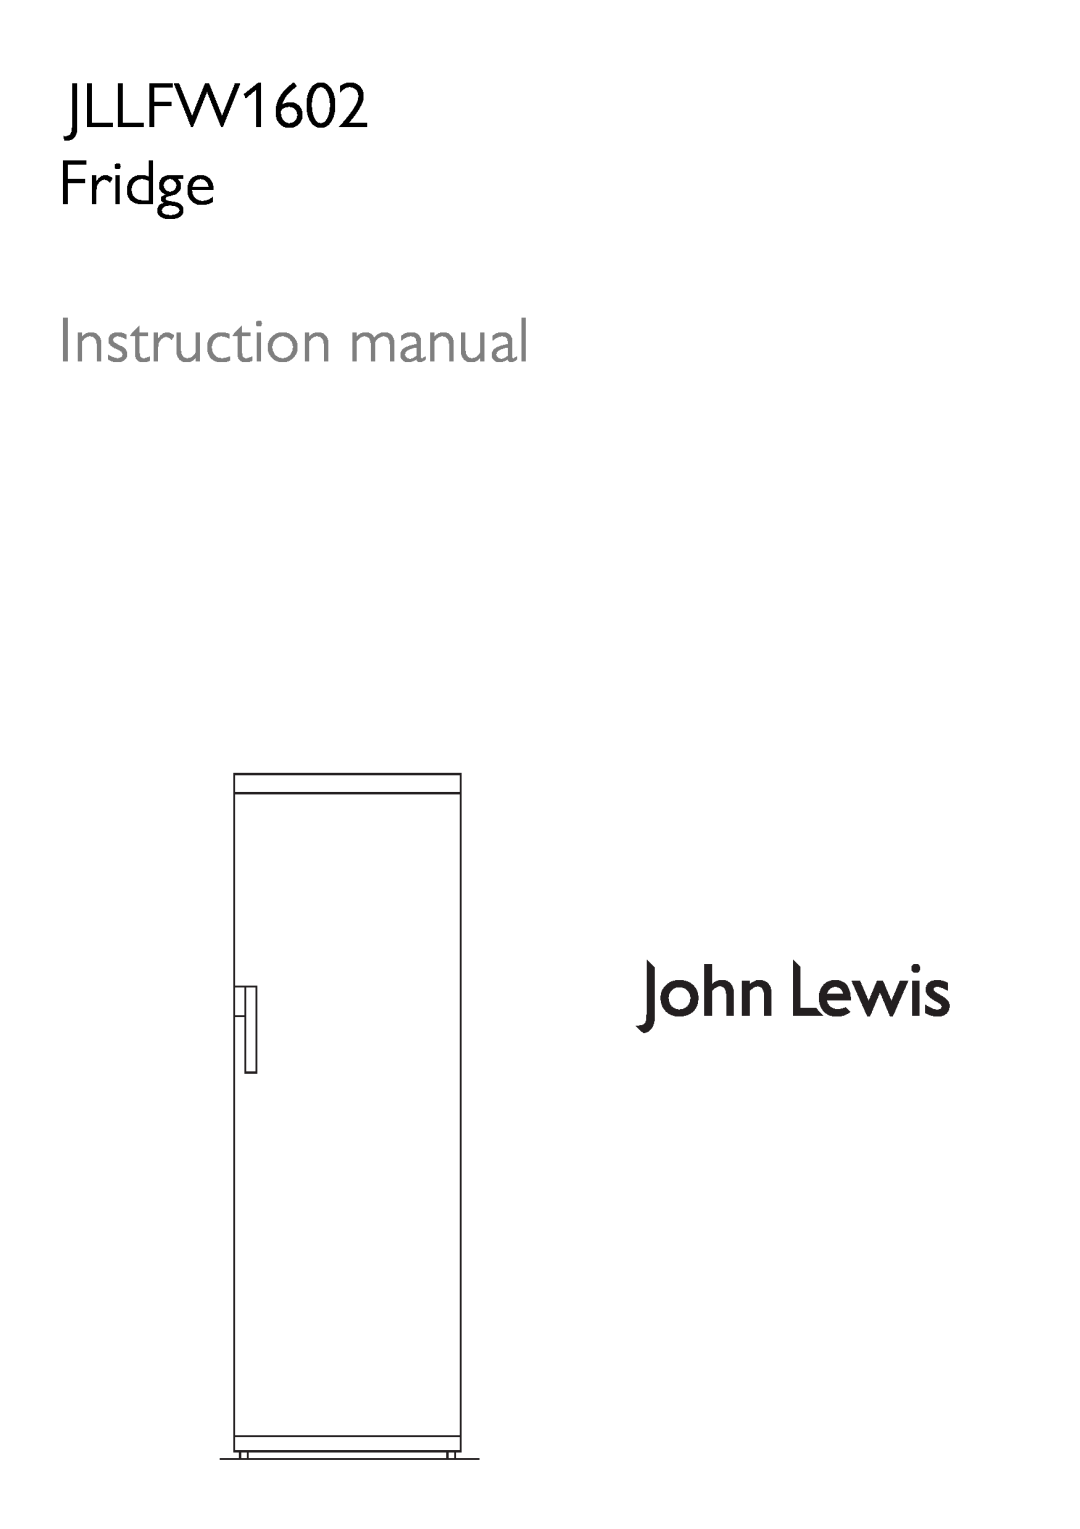 John Lewis instruction manual JLLFW1602 Fridge, Instruction manual 